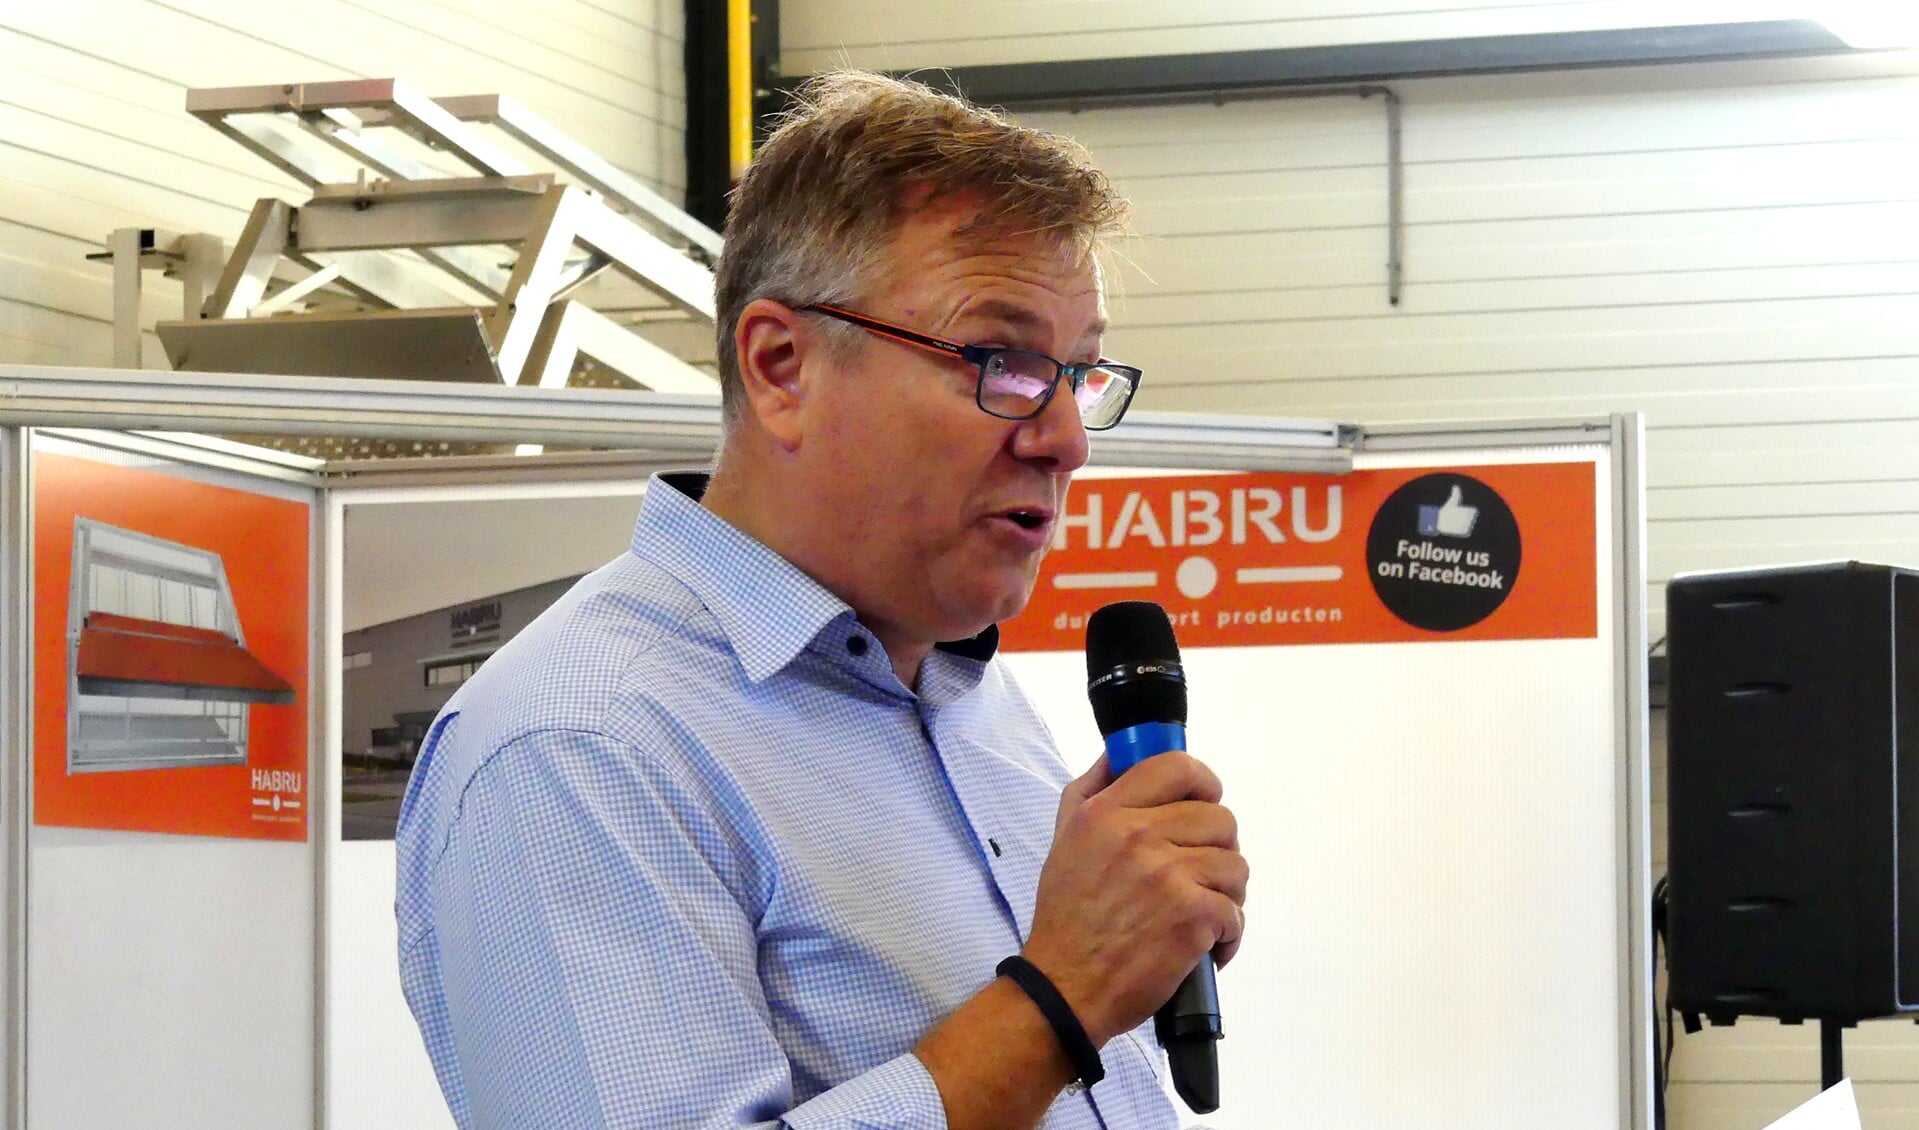 Hans Bruns, organisator van de Habru Duivendag. Foto: Jan Kraaijenbrink